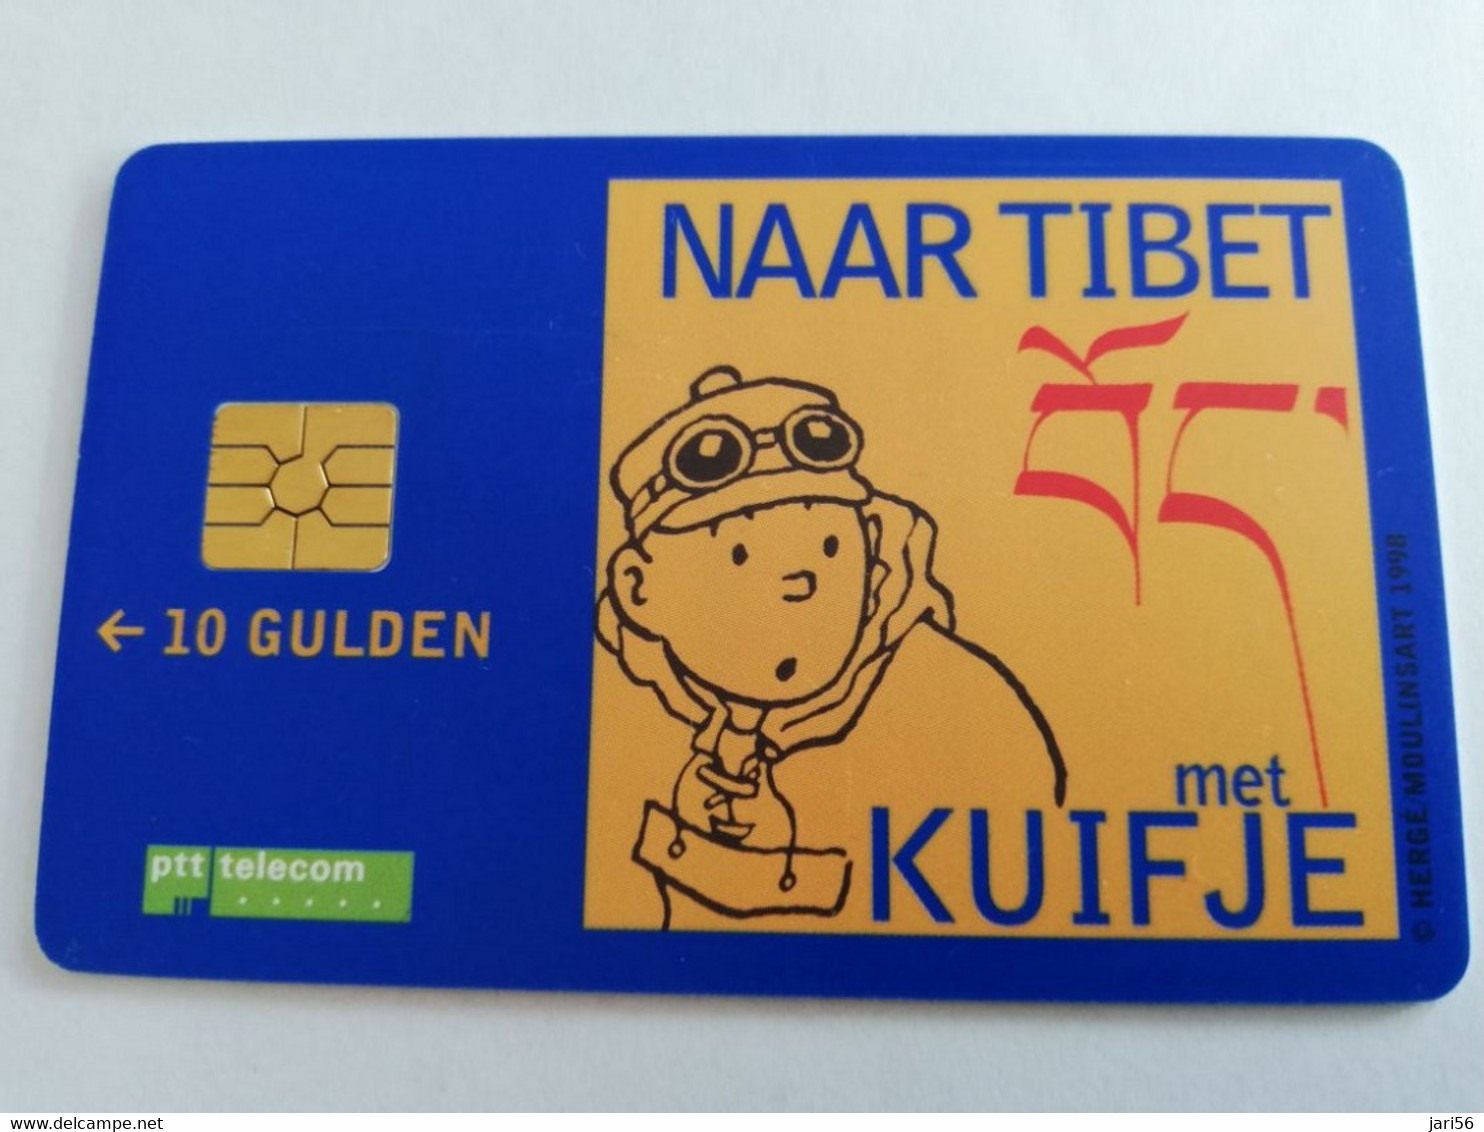 NETHERLANDS CHIPCARD  HFL 10,00  COMIC / TIN TIN / KUIFJE NAAR TIBET /  Used Card  ** 10239 ** - Pubbliche